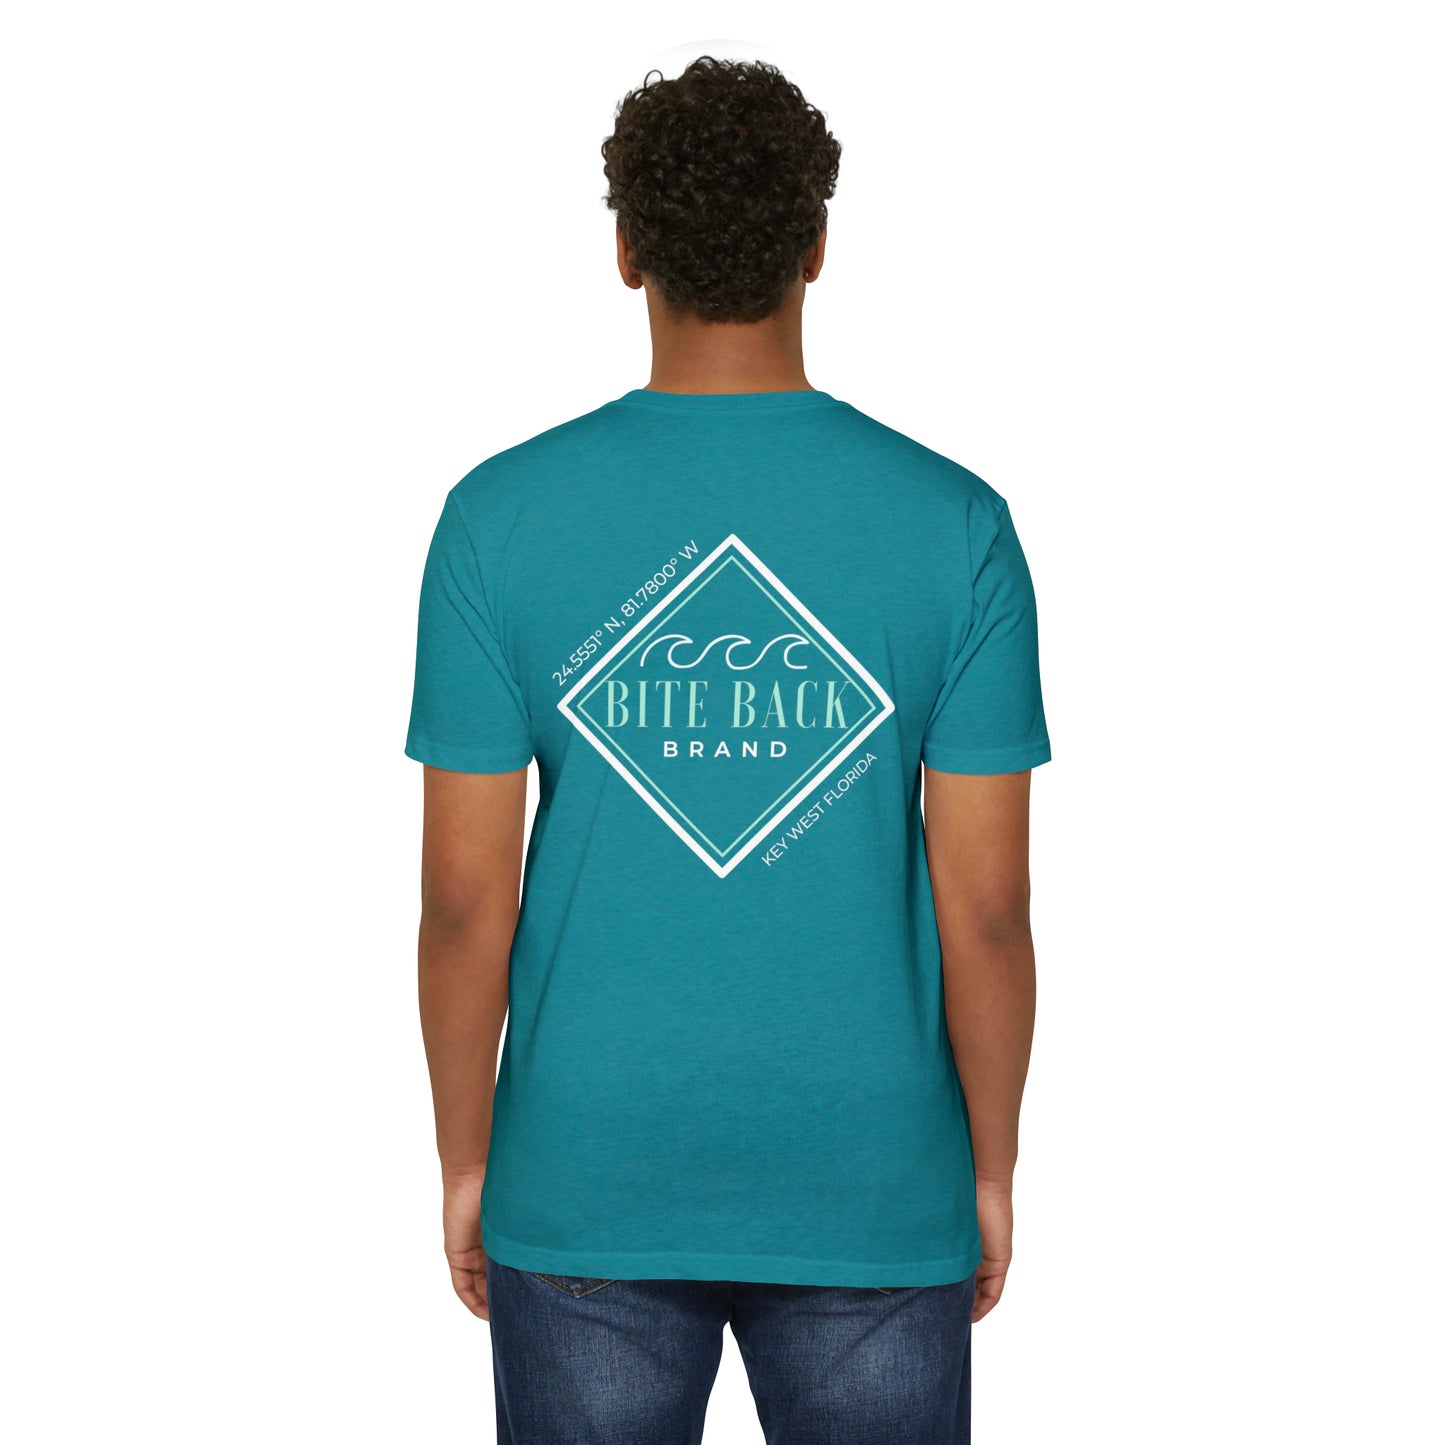 Key West Coordinates T-shirt